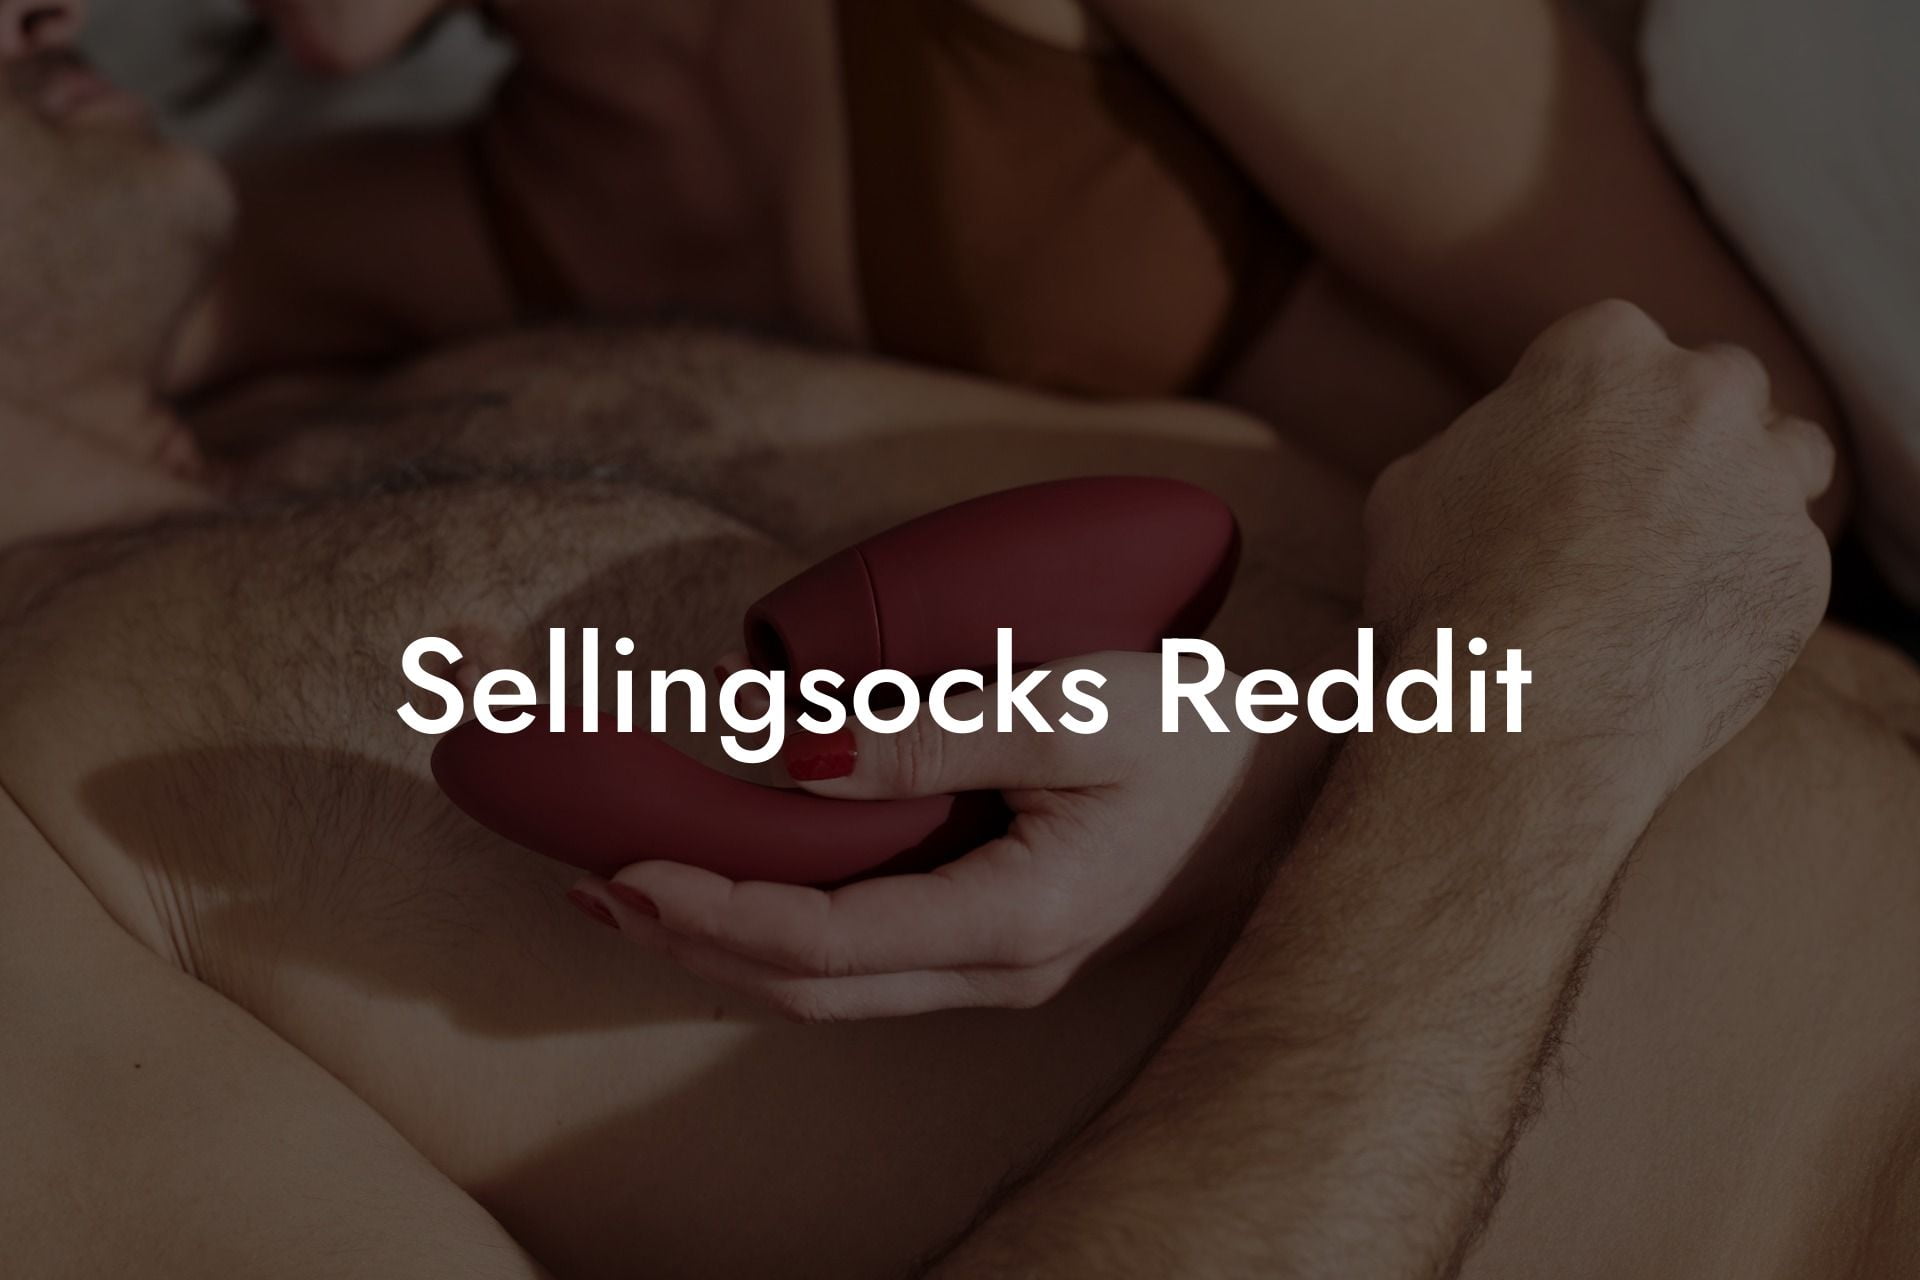 Sellingsocks Reddit